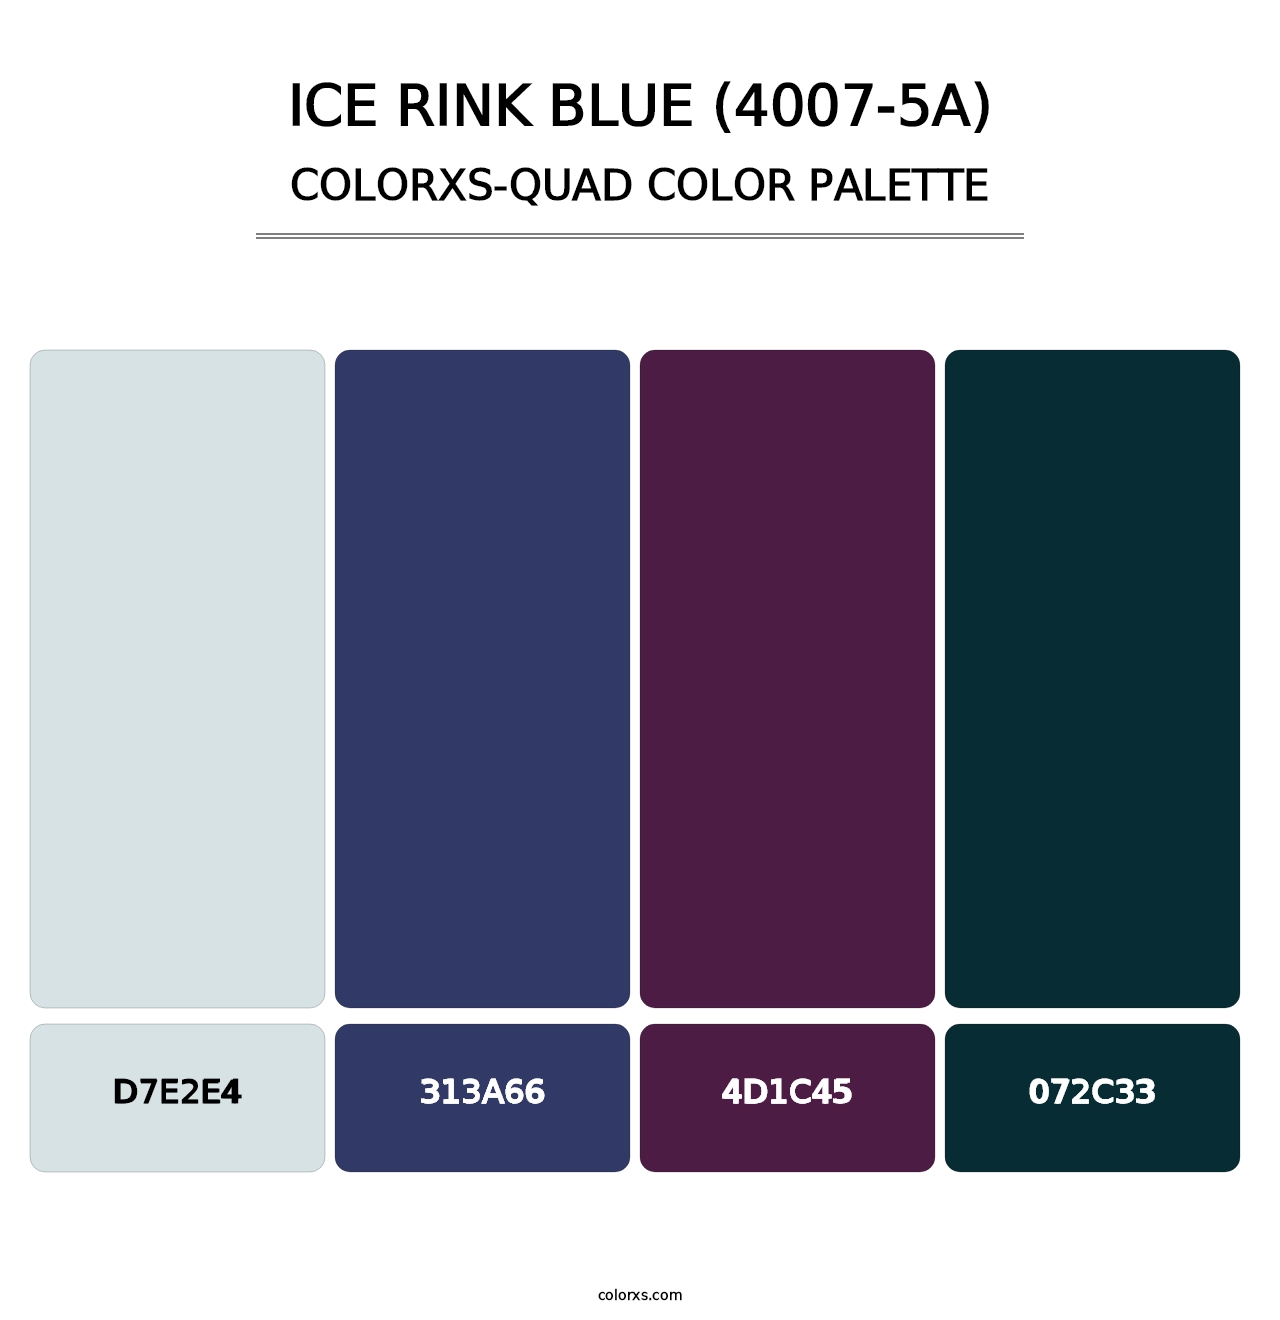 Ice Rink Blue (4007-5A) - Colorxs Quad Palette